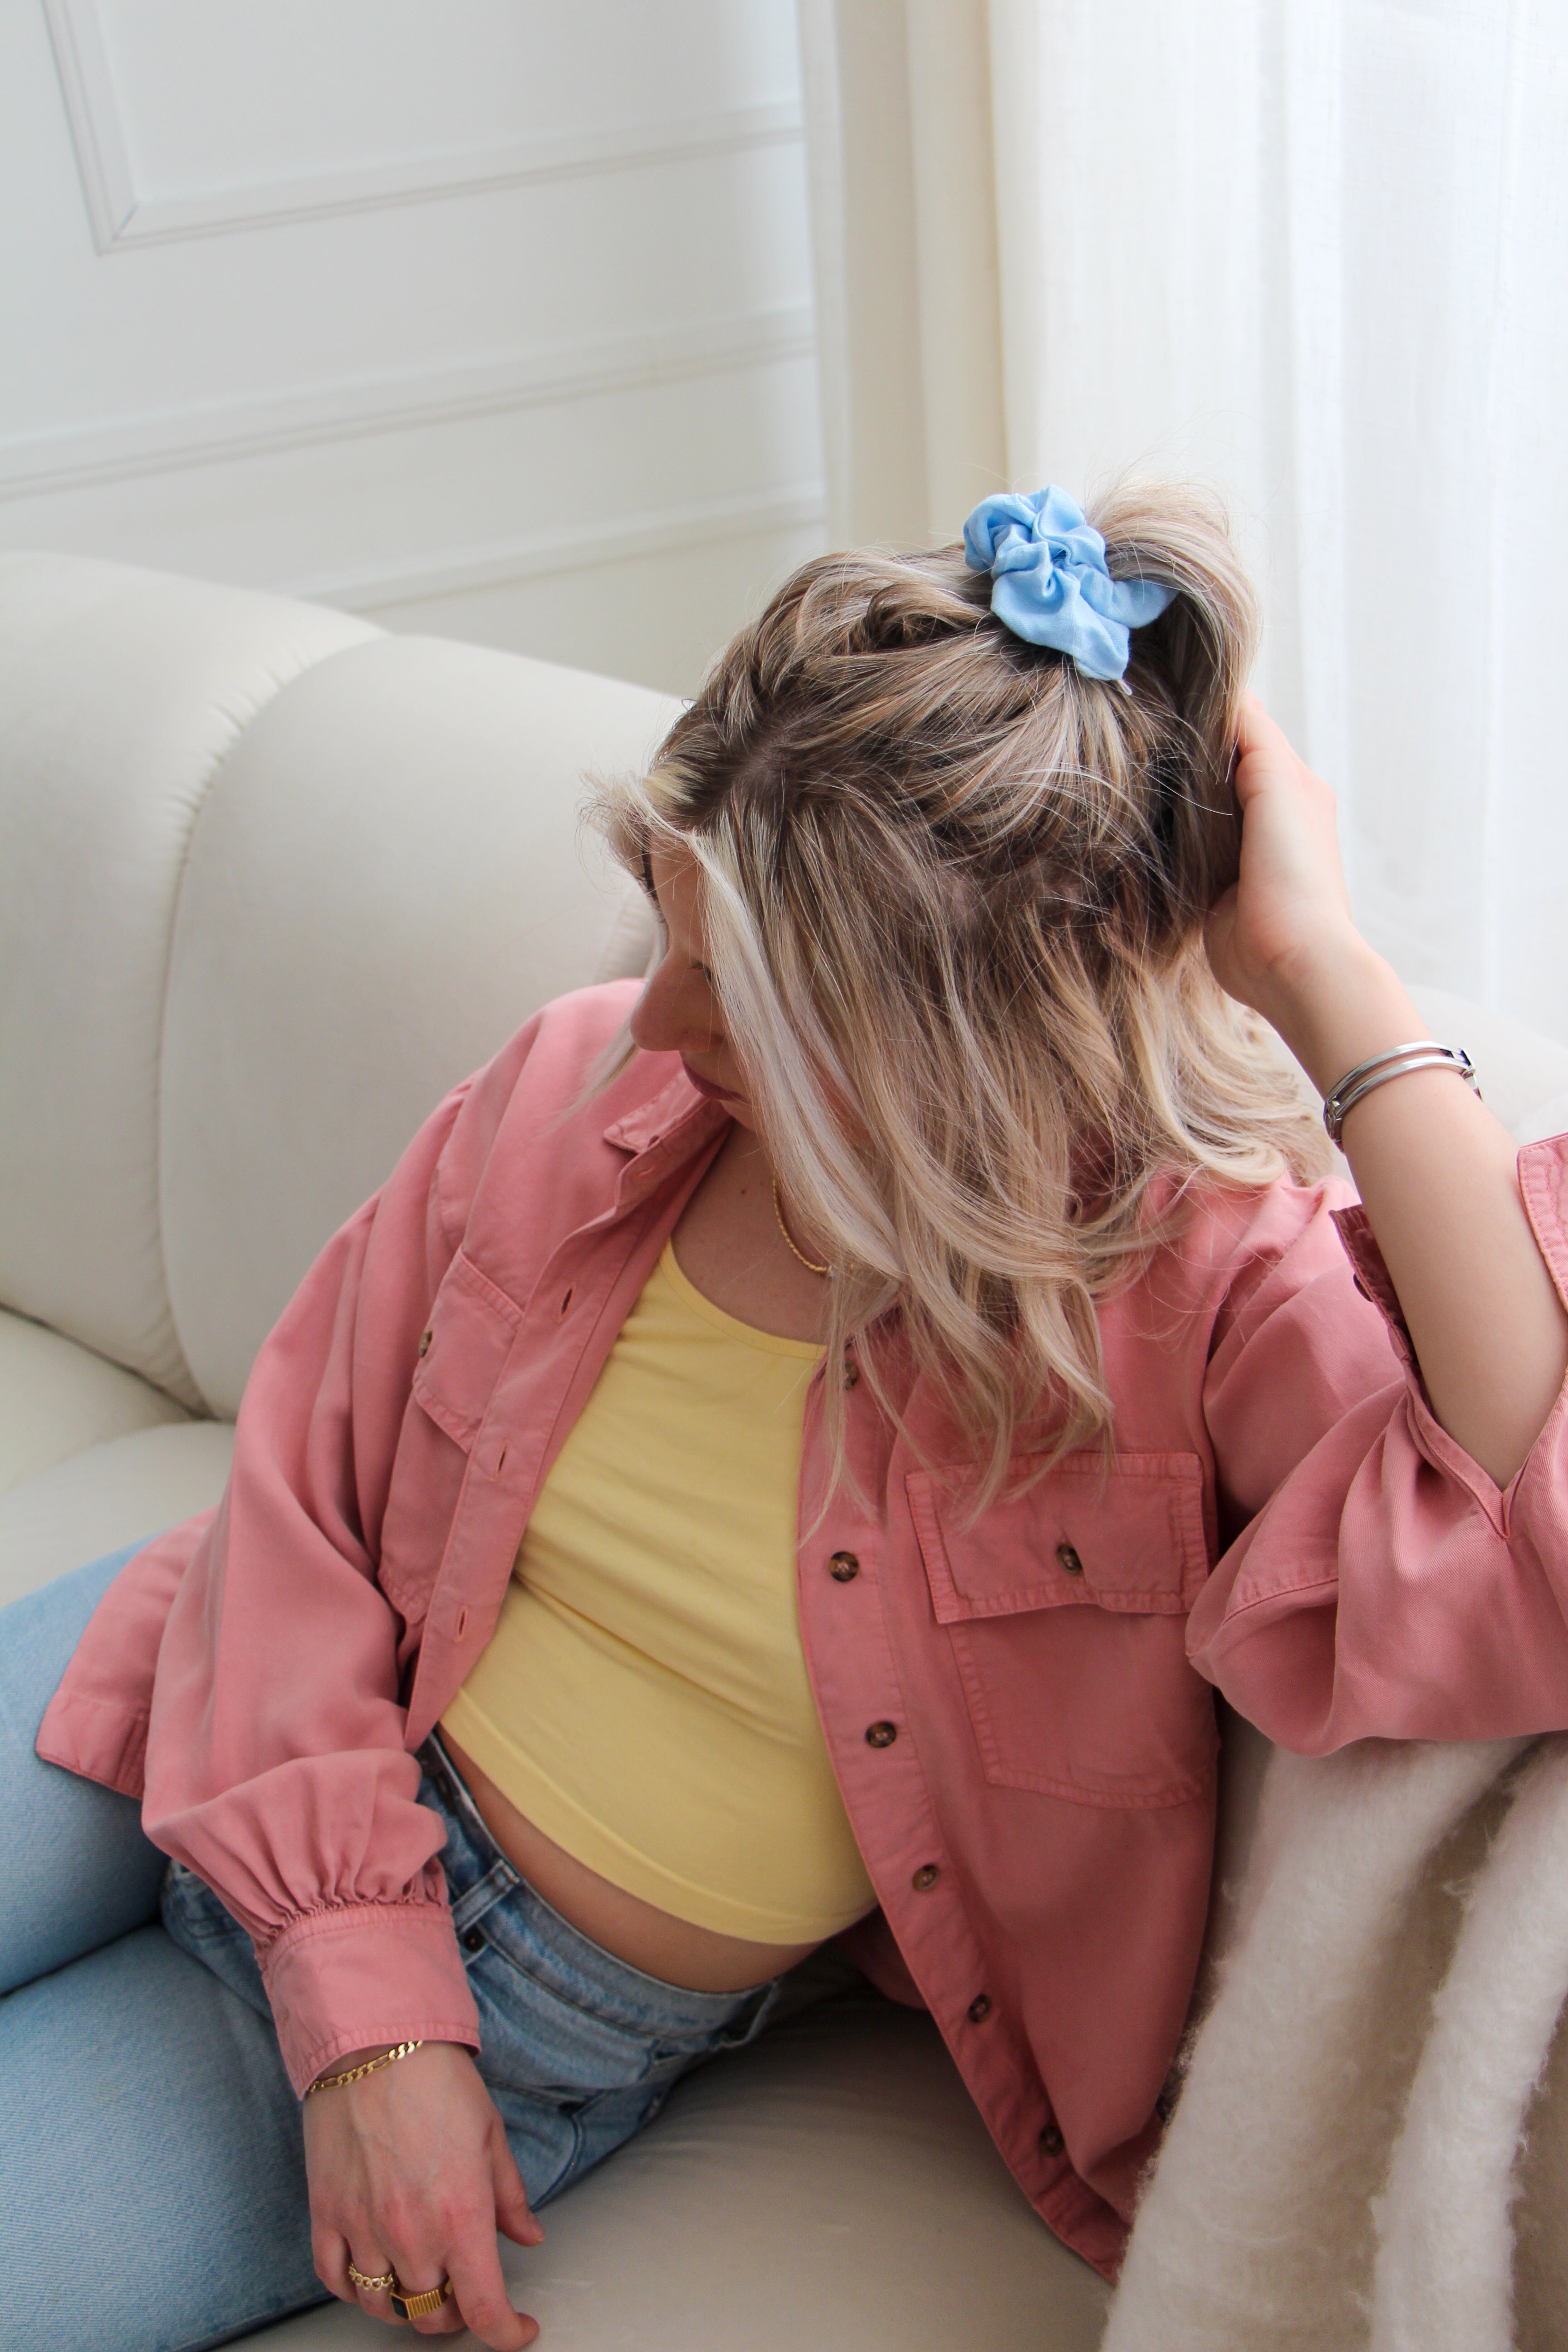 Baby Blue Linen Scrunchie in Beau size in model's half up half down ponytail